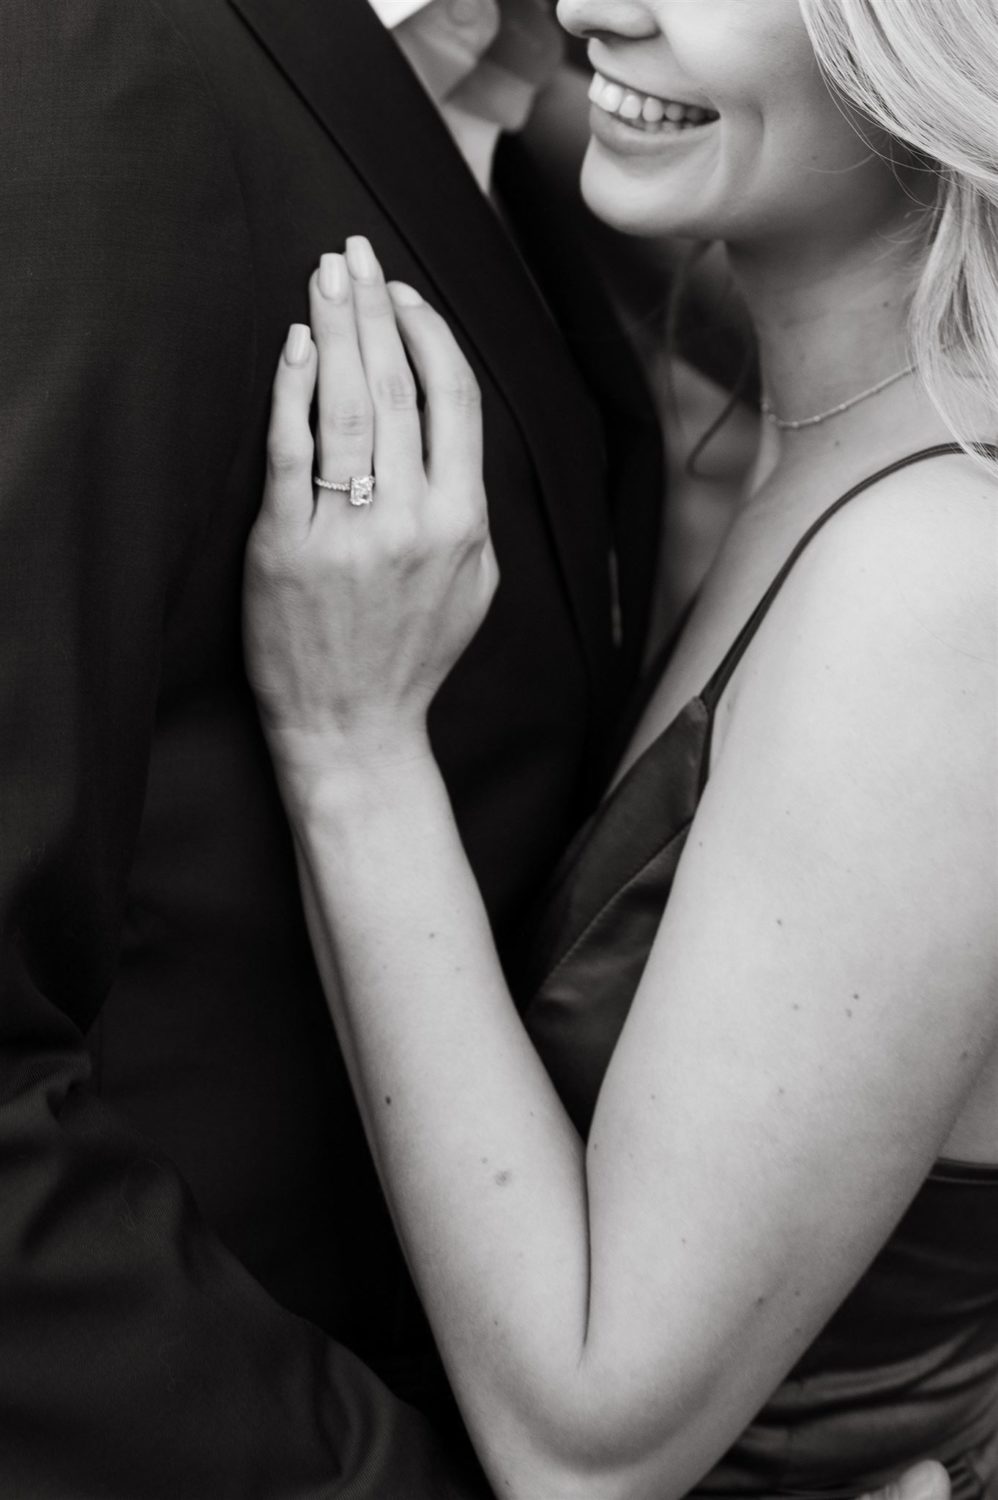 couple engagement ring side profile photo